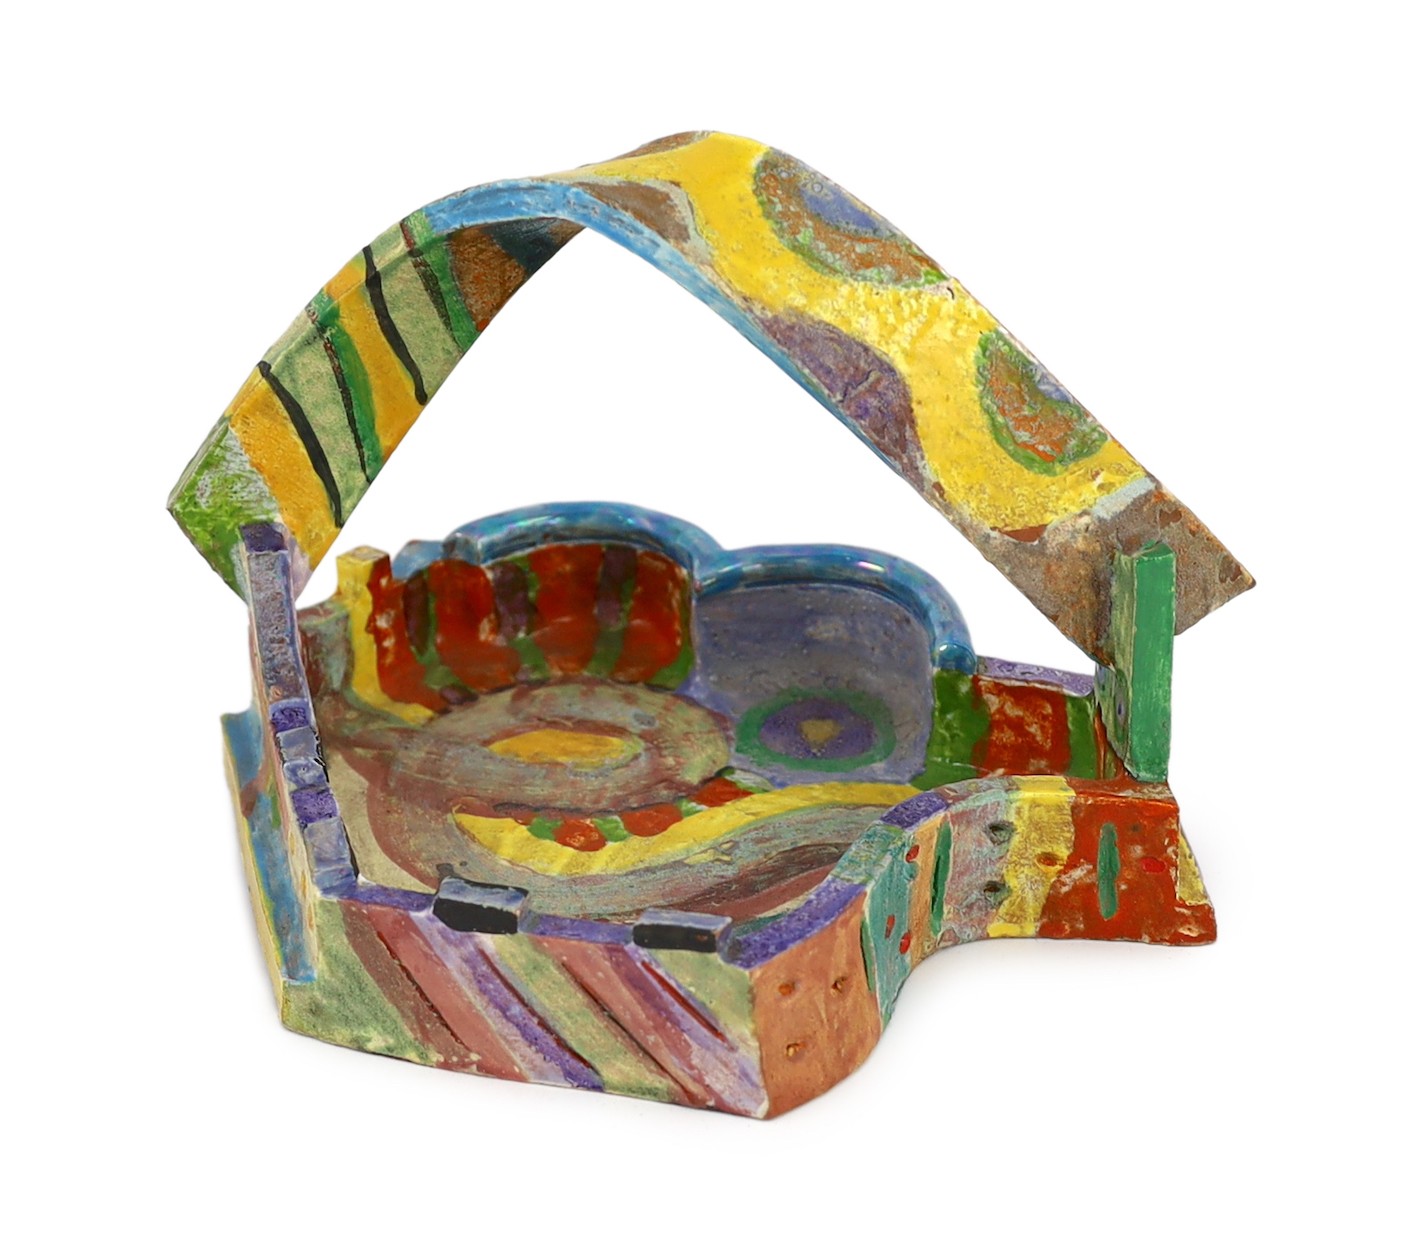 Angus Suttie (1946-1993), a multicoloured glazed stoneware dish or basket, 21.6cm wide 16.5cm high                                                                                                                          